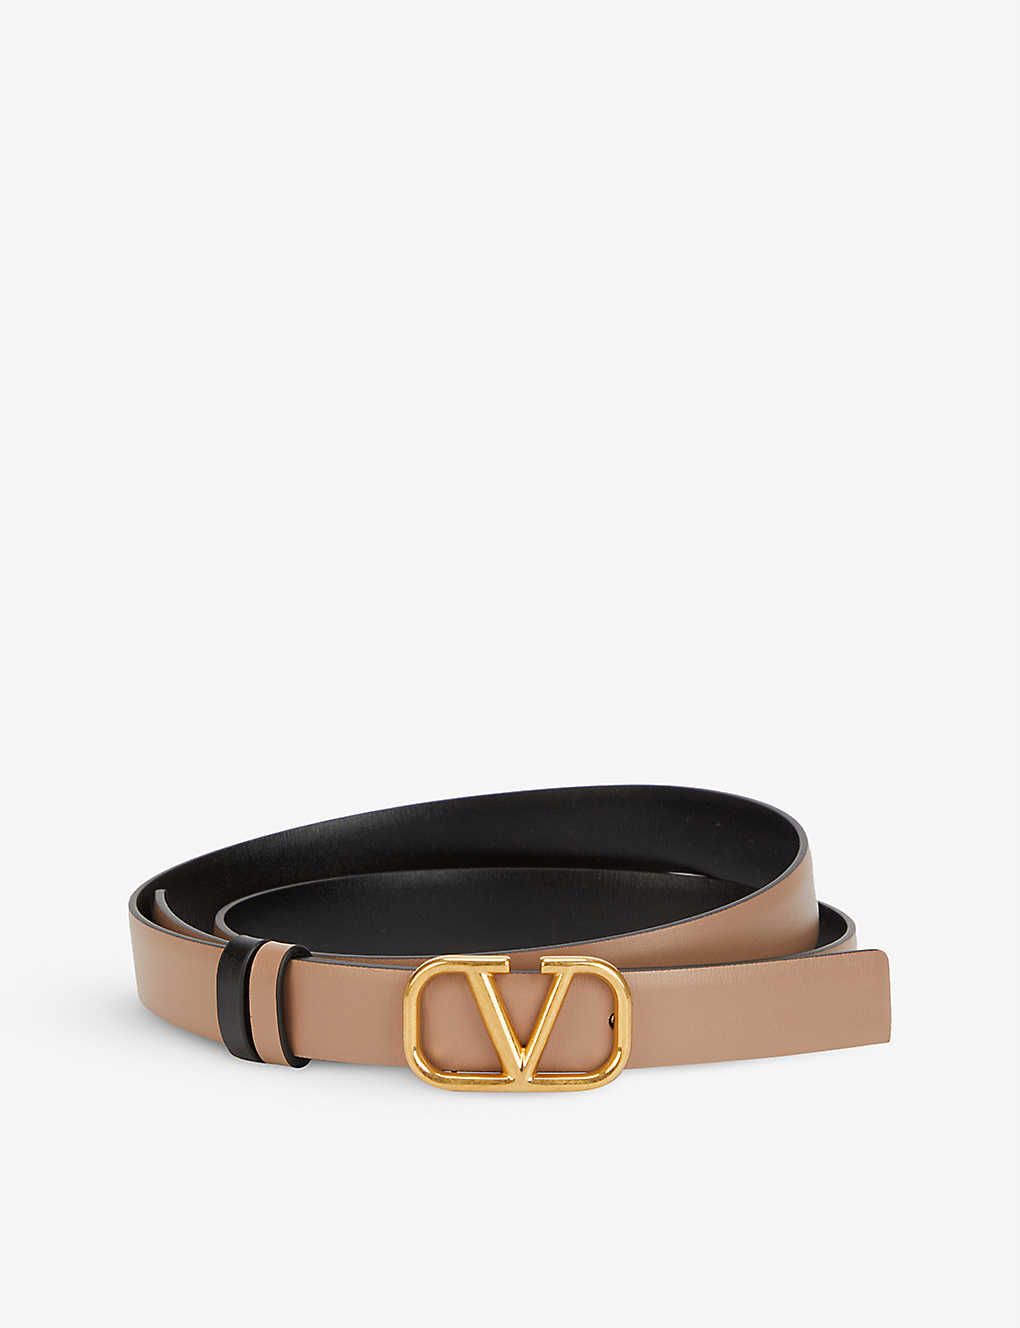 VLOGO slim reversible leather belt | Selfridges